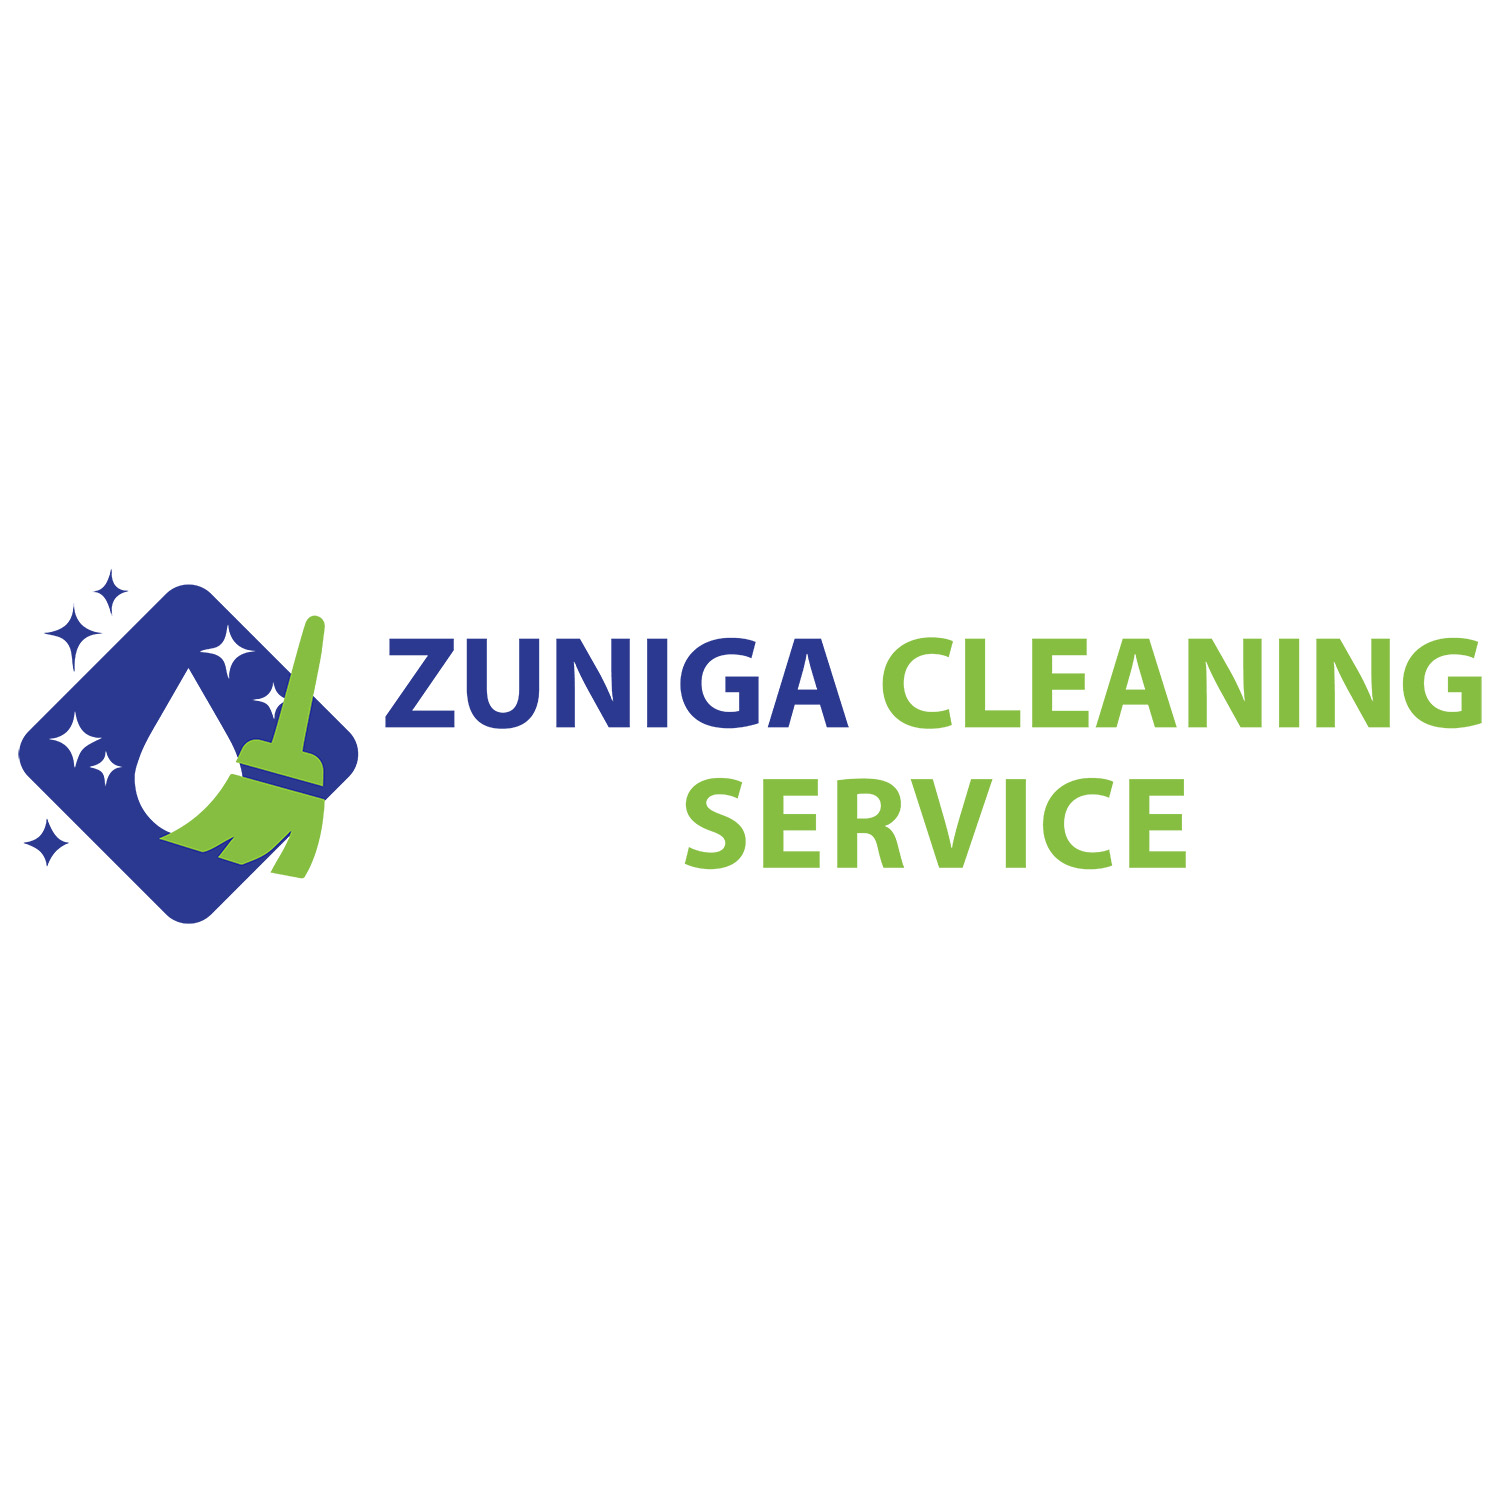 Zuniga Cleaning Service